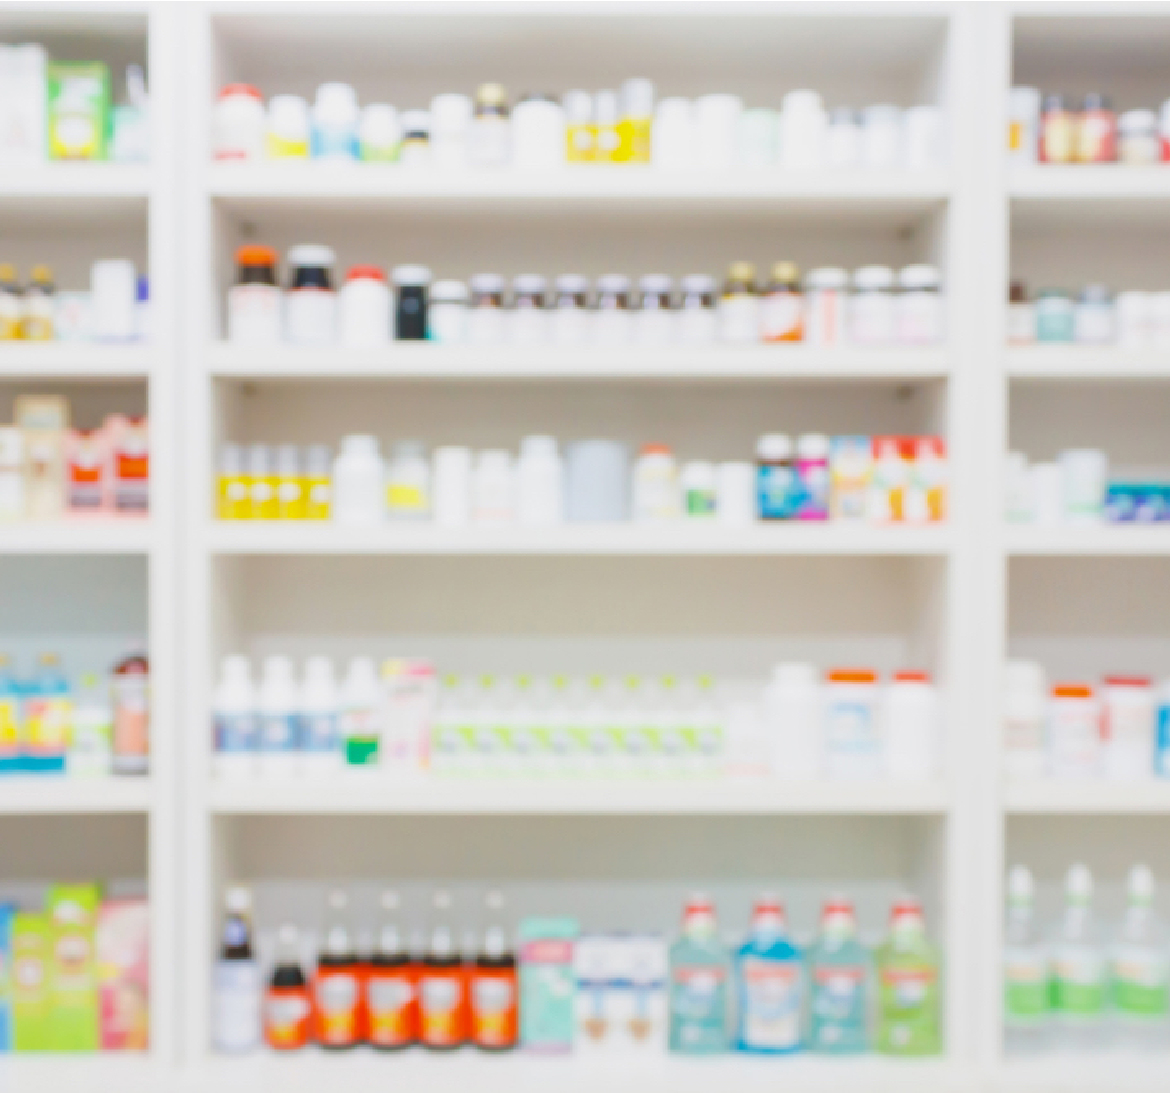 Slightly blurred view of shelves of medication bottles.